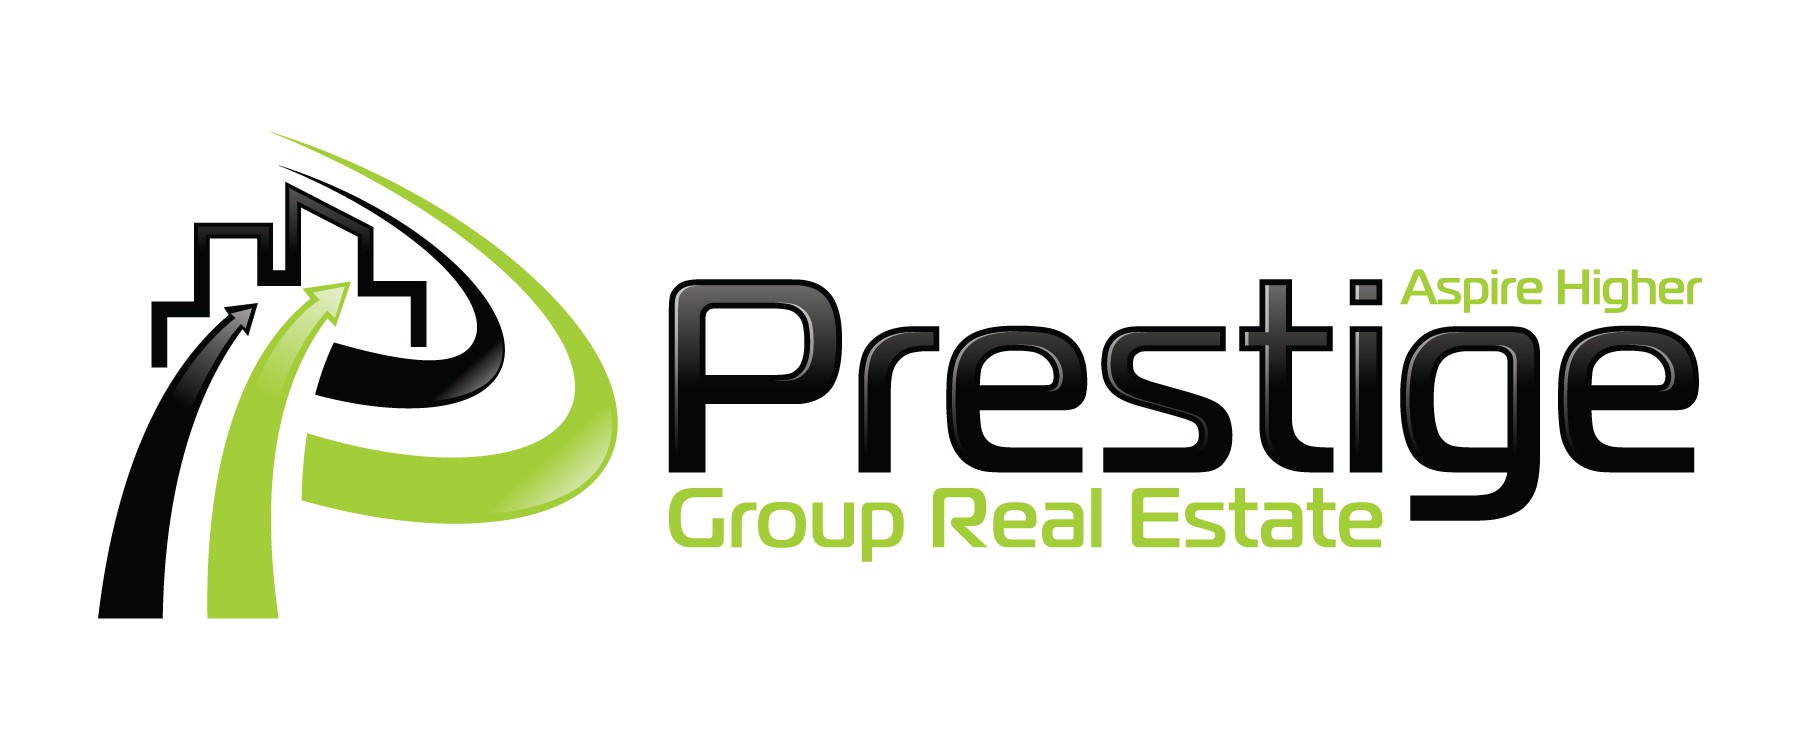 H h properties. Prestige Group. Логотип Prestige Finance Group. Prestigio логотип. Престиж лого.